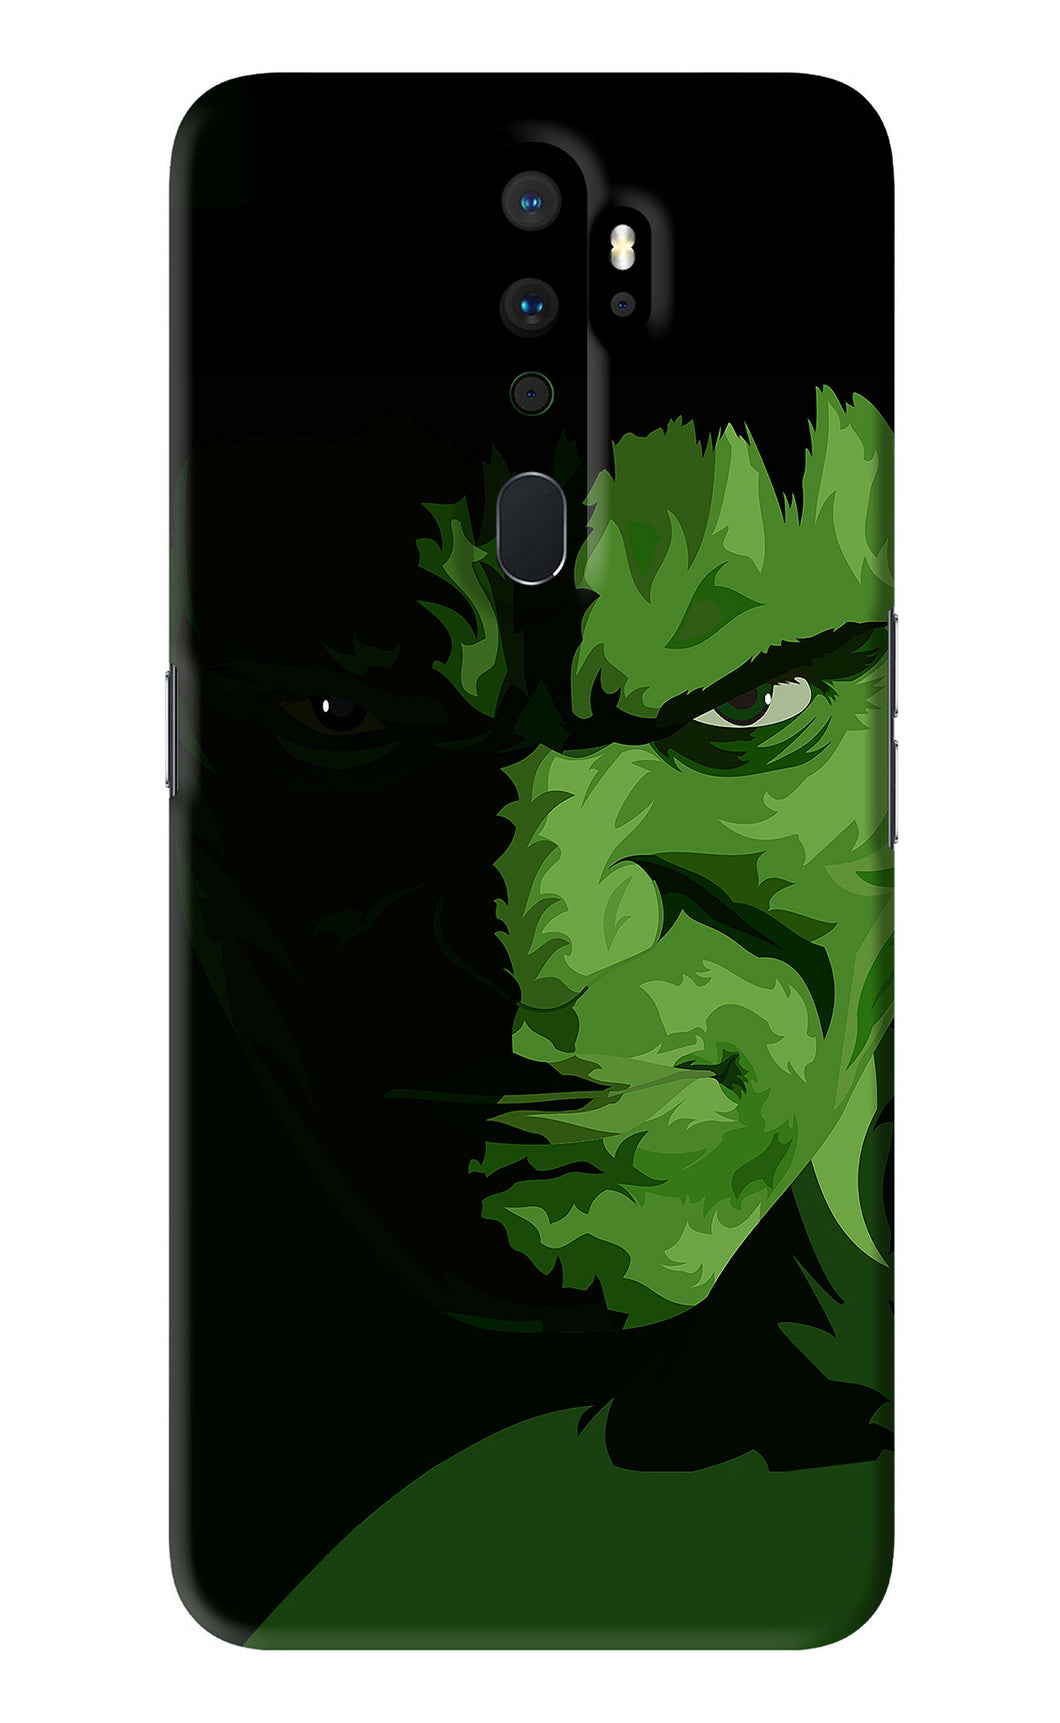 Hulk Oppo A9 2020 Back Skin Wrap